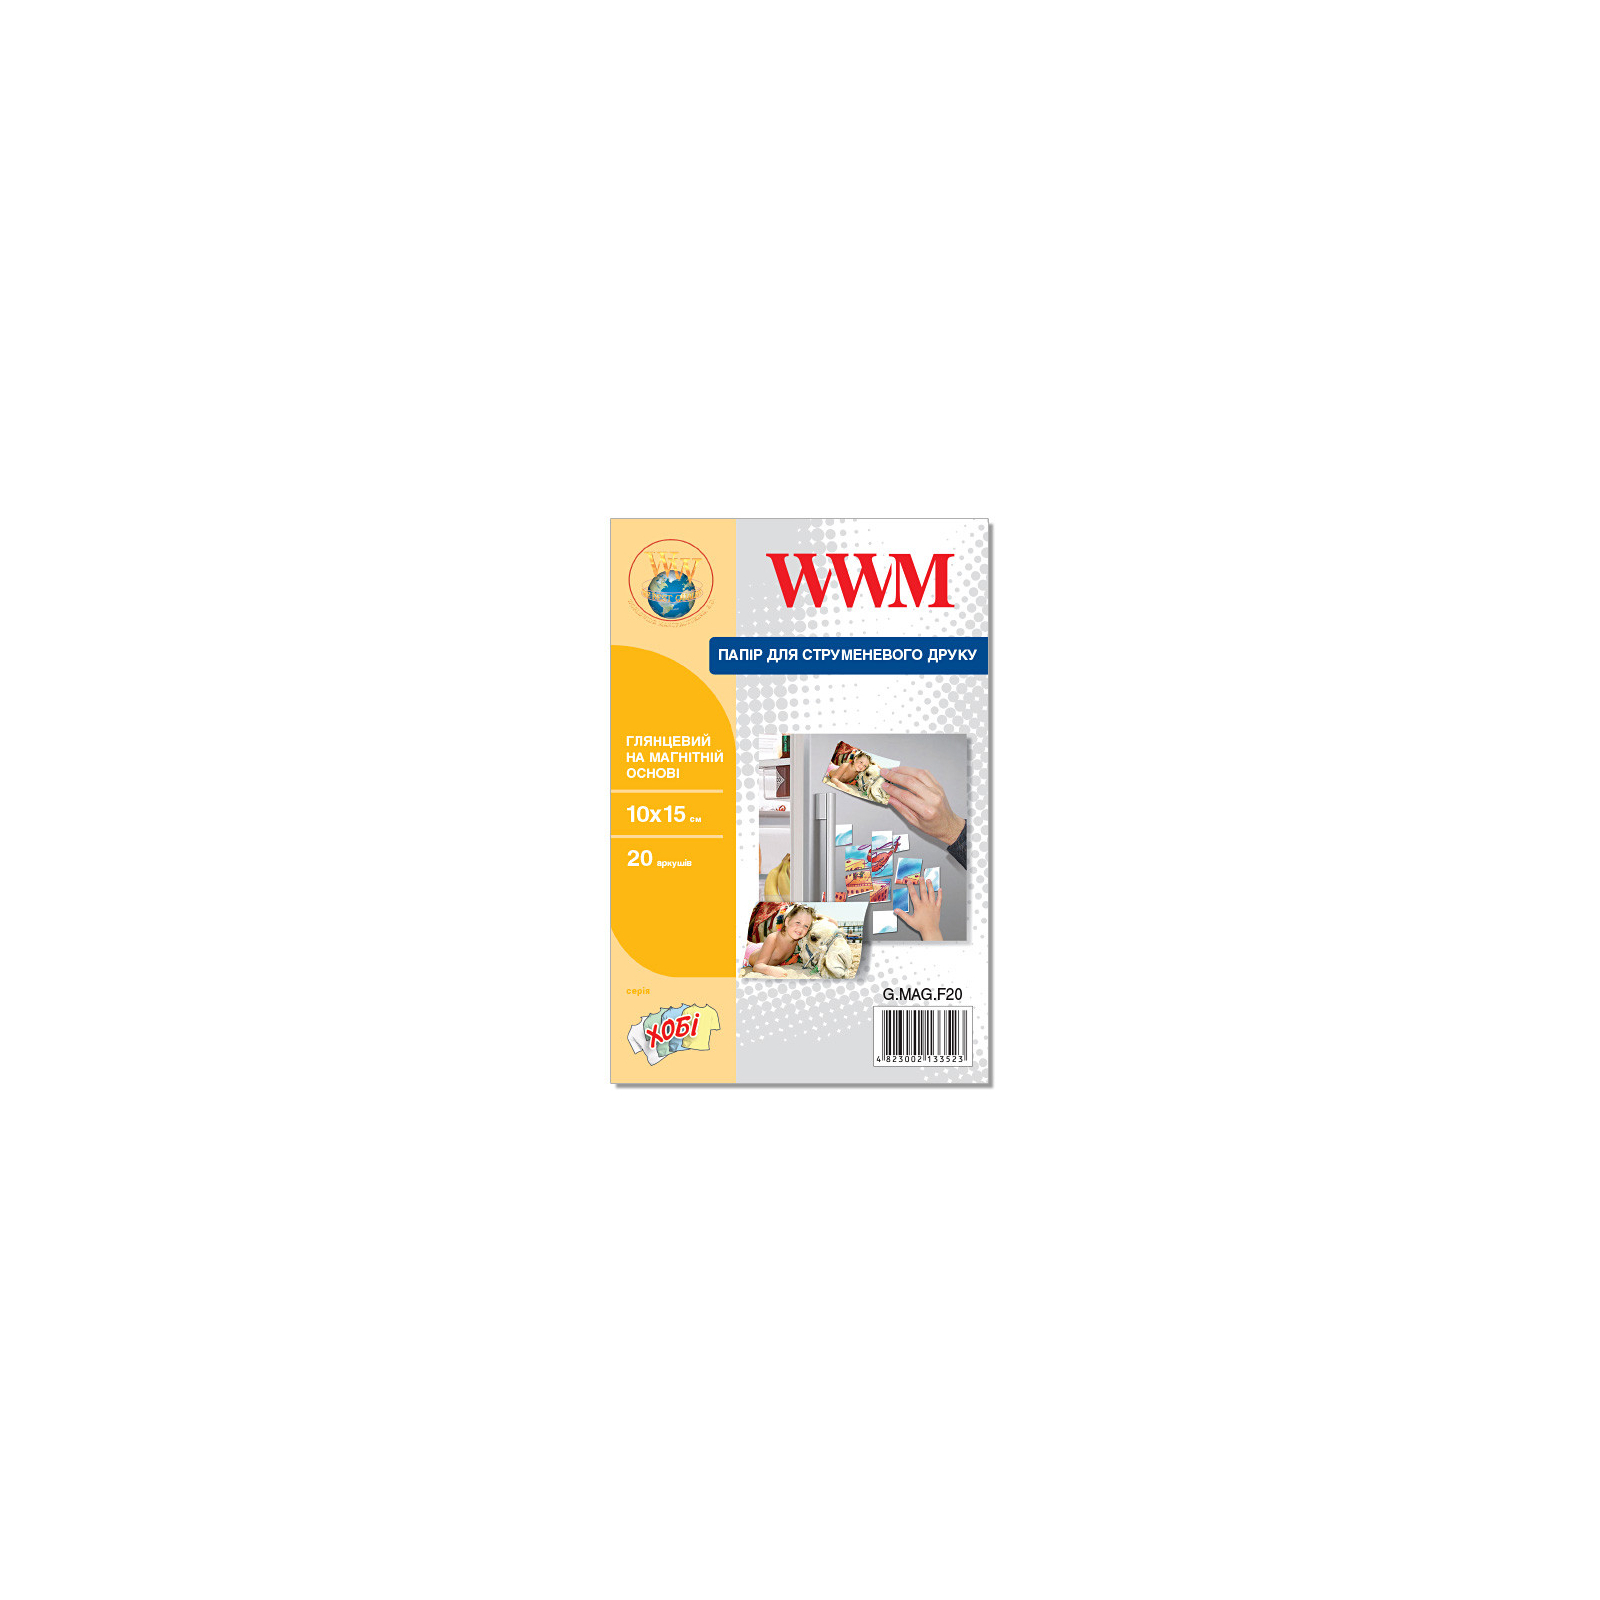 Фотобумага WWM 10x15 magnetic, glossy, 20л (G.MAG.F20)